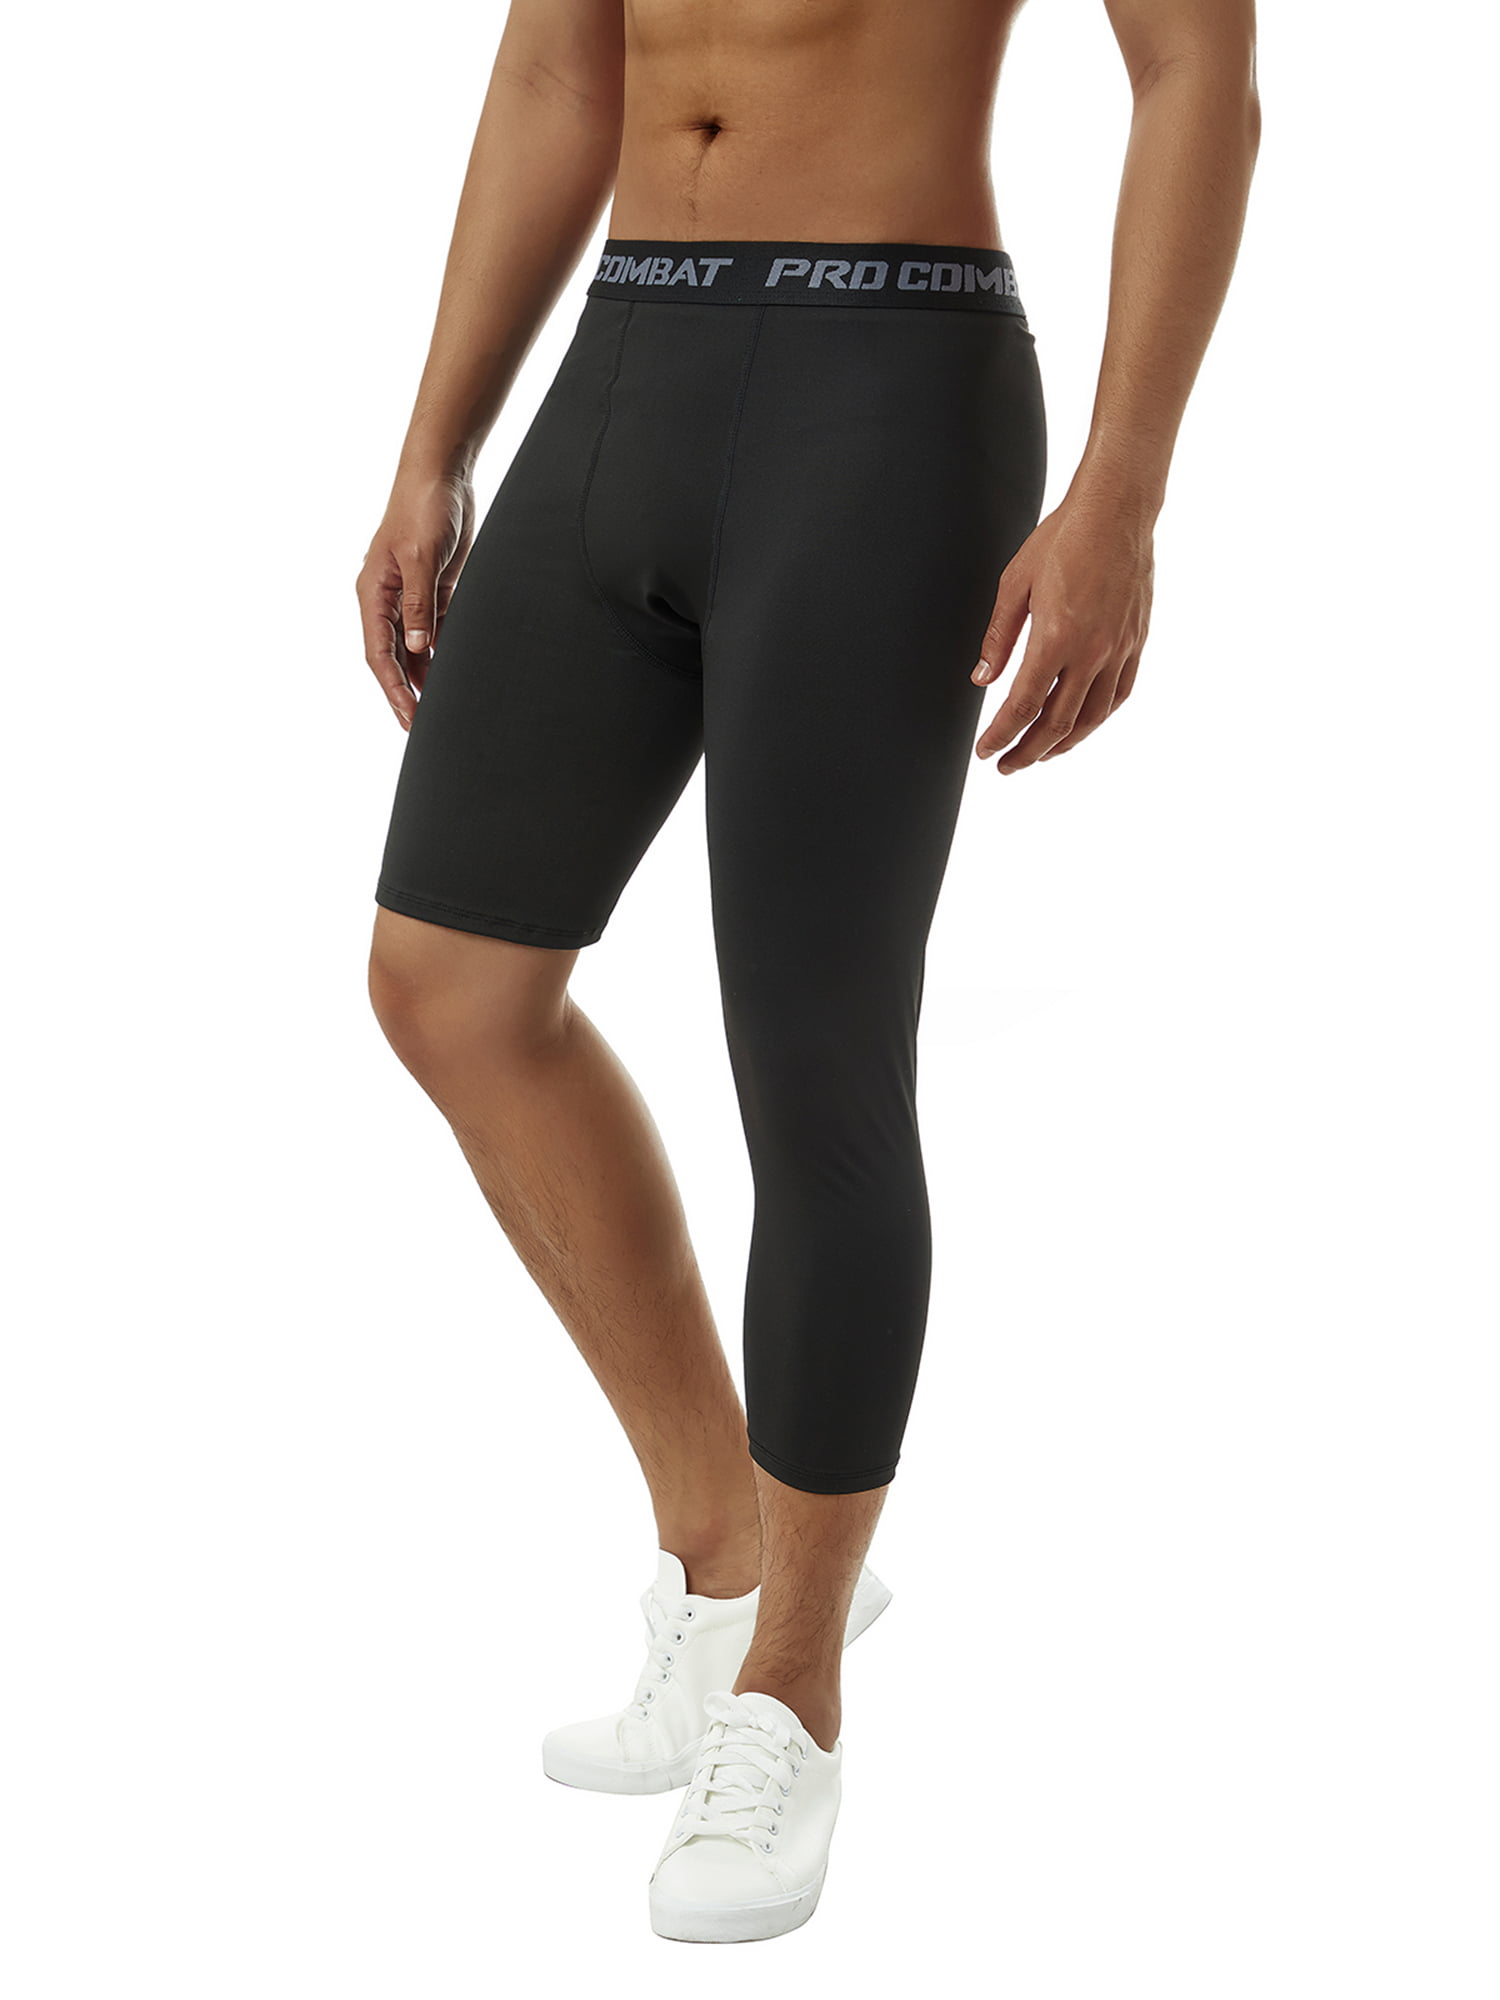 CenturyX Men One Leg Compression Pants 3/4 Capri Tights Athletic Basketball Leggings  Workout Base Layer Underwear White 2 XXXL 